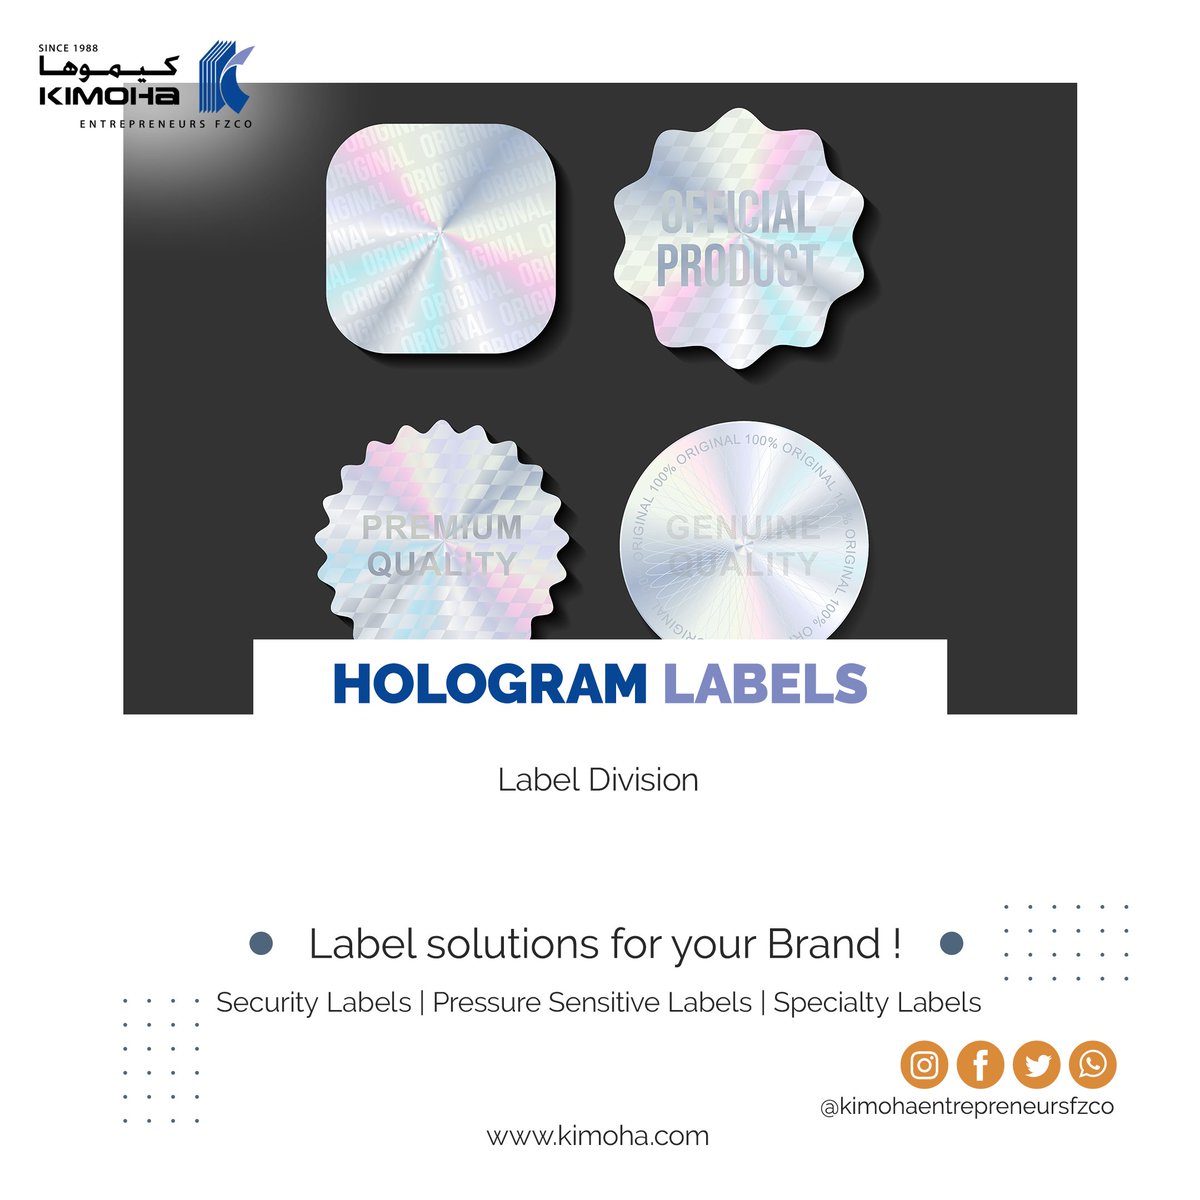 HOLOGRAM LABELS 
kimoha.com
#printing #printingsolutions #packagingsolutions #packaging #packagingindustry #digitalprinting #flexoprinting #uae #barcodelabels  #labelprinting #securitylabels #assettracking #assetlabels #security #void #hologram #hologramlabels